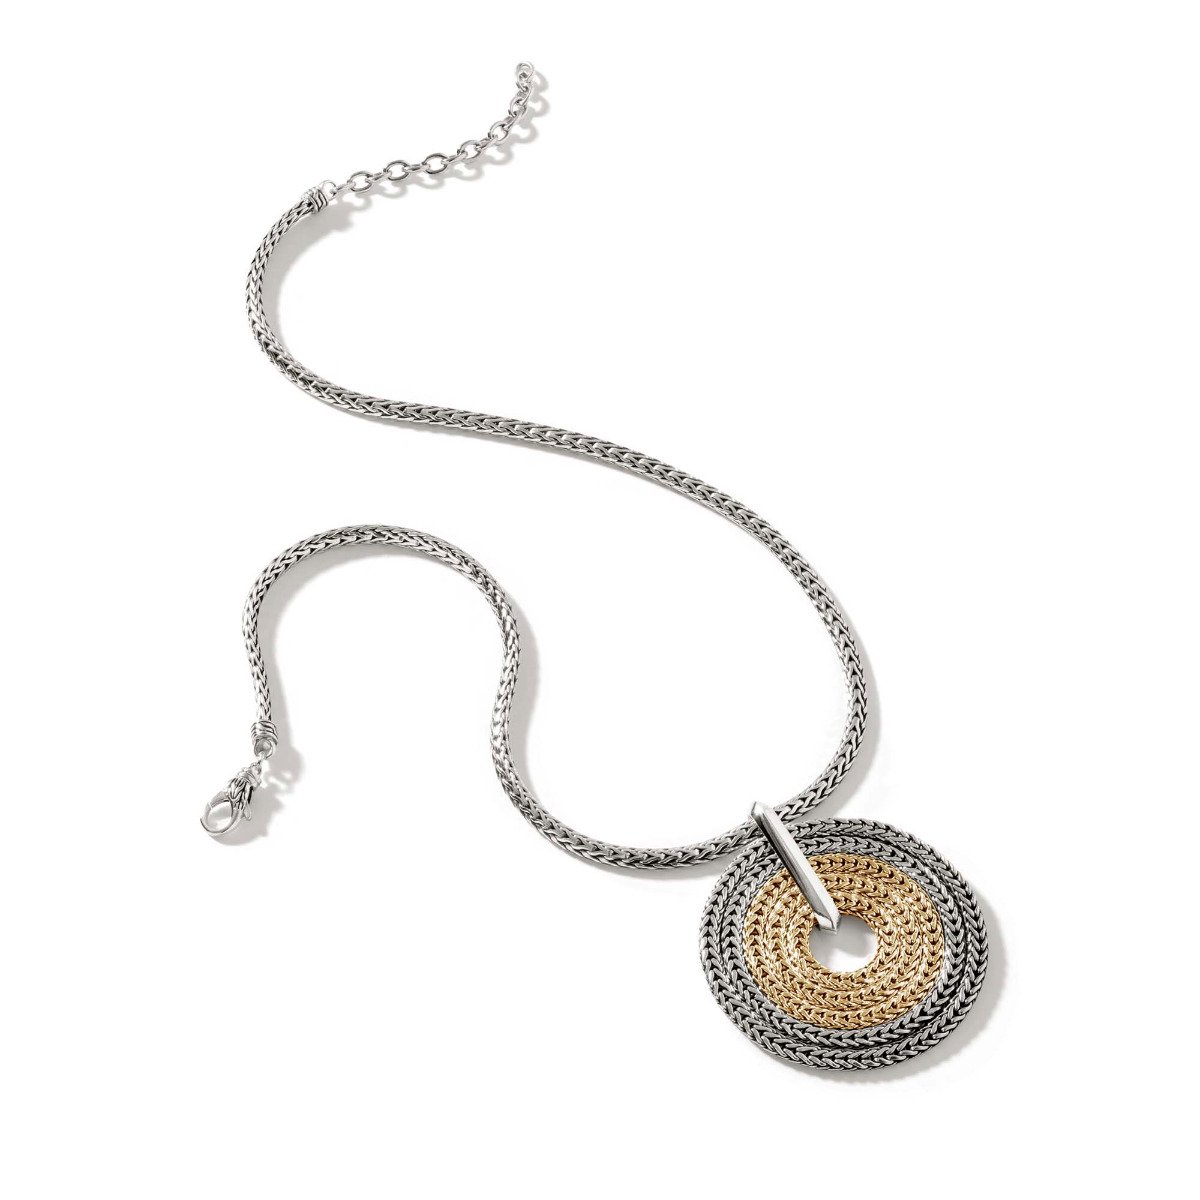  John Hardy "Rata" Chain Large Pendant Necklace